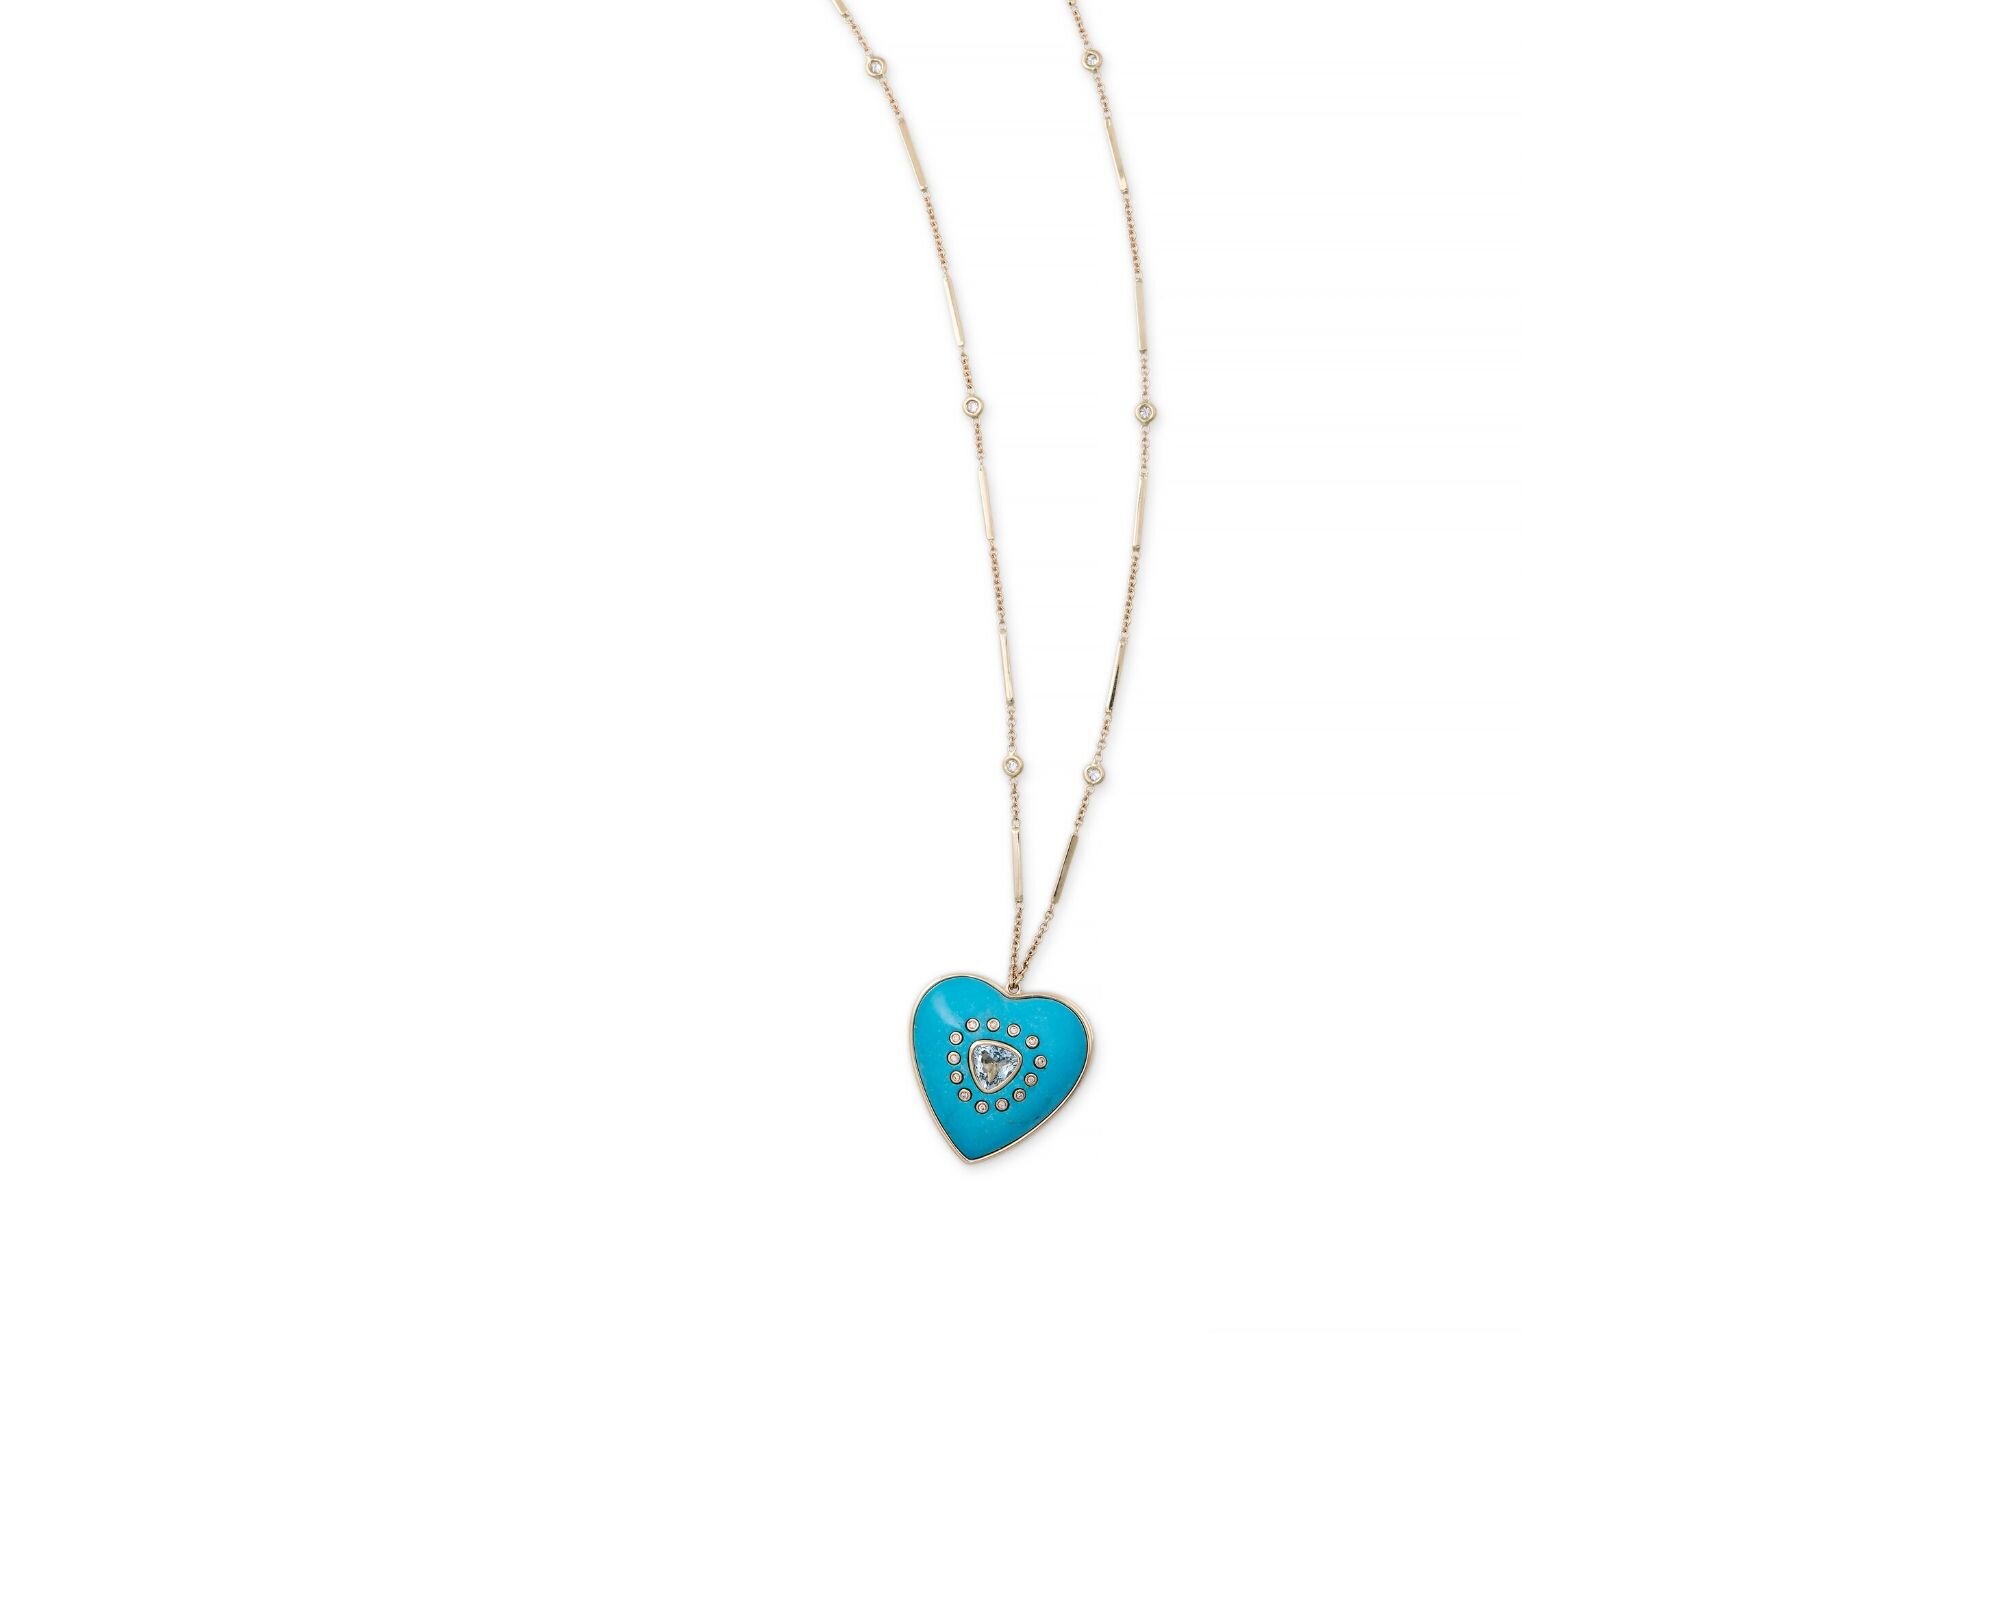  Jacquie Aiche- Turquoise Hamsa Puffed Heart Charm ($2650)